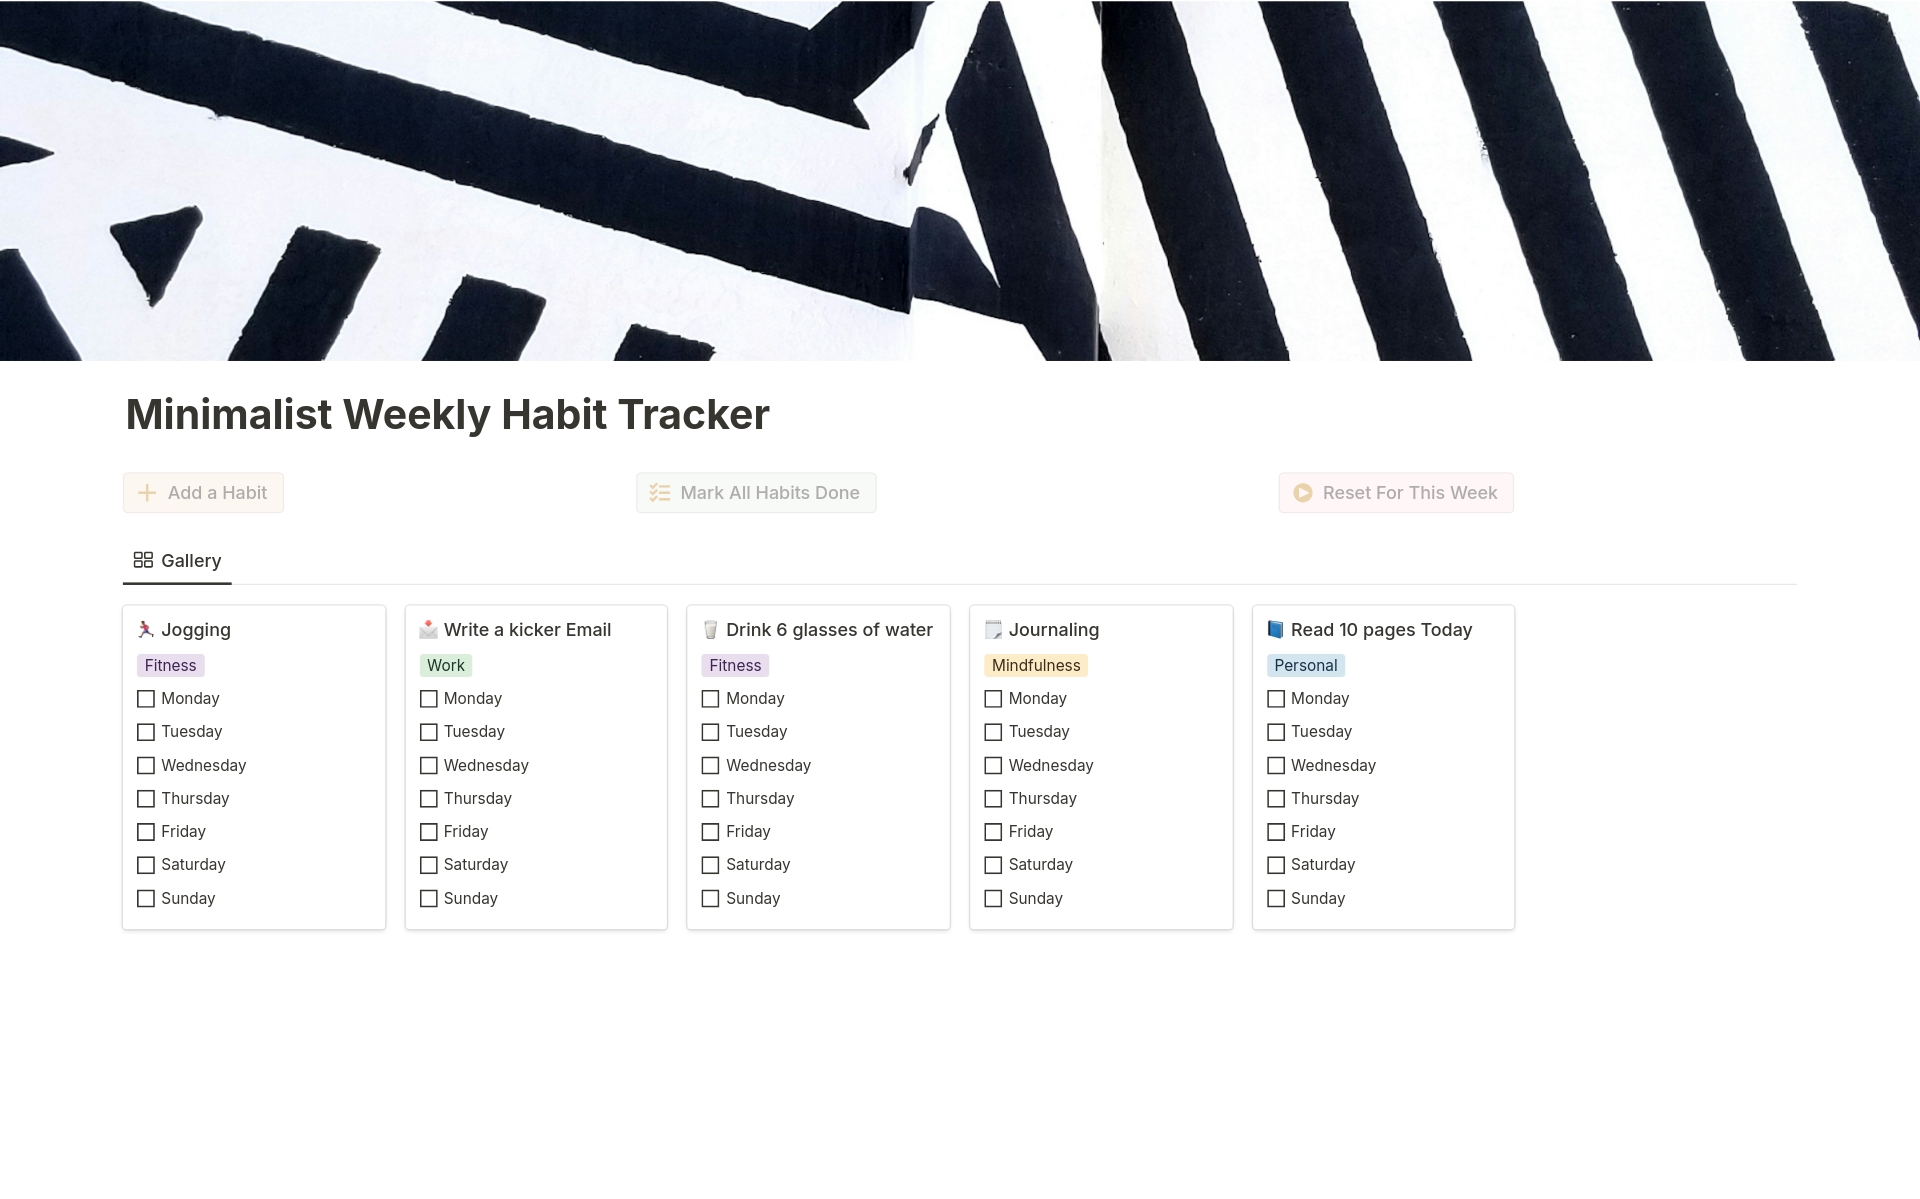 Uma prévia do modelo para Minimalist Weekly Habit Tracker